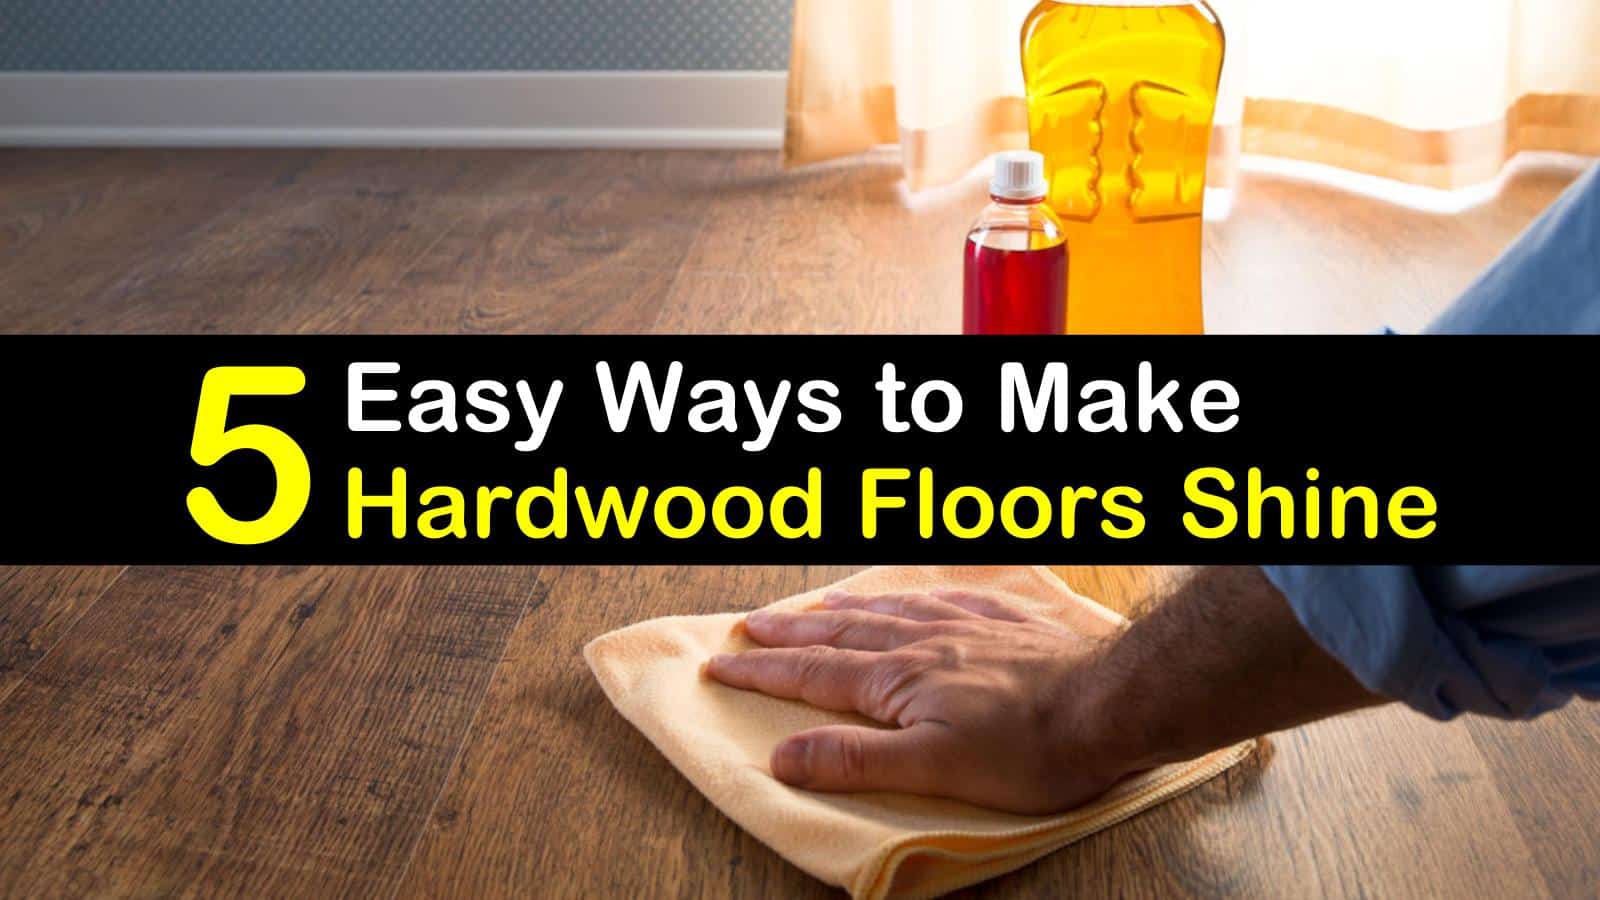 5 Easy Ways To Make Hardwood Floors Shine, How To Make Old Hardwood Floors Shine